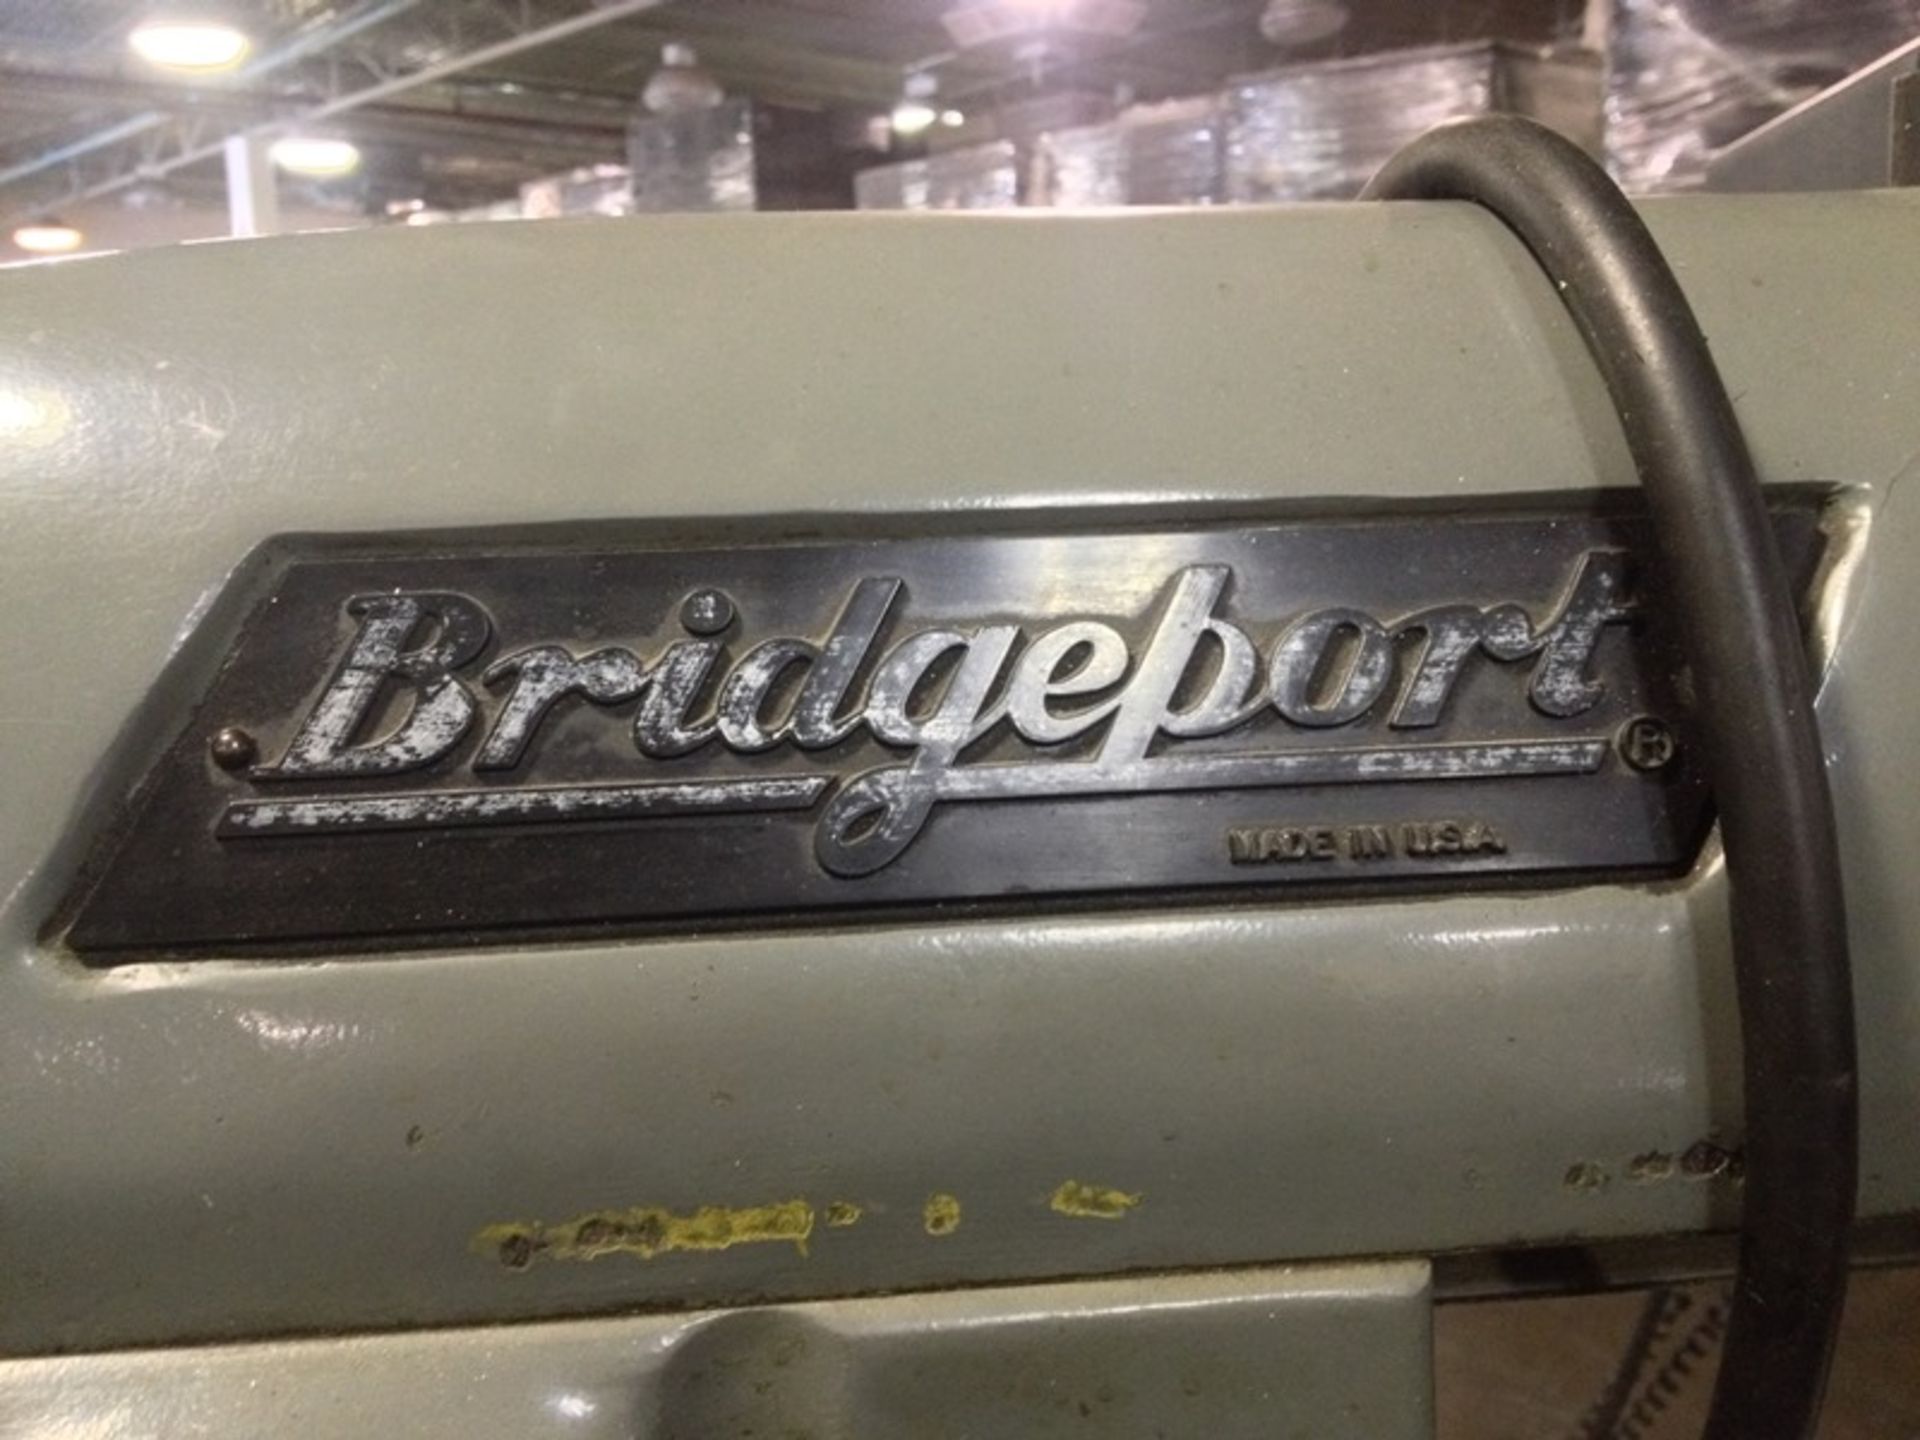 2HP Milling Machine, Brand: Bridgeport, Series: 2J 123204-2. Condition: Good, Location: Cd. Juarez - Image 11 of 20